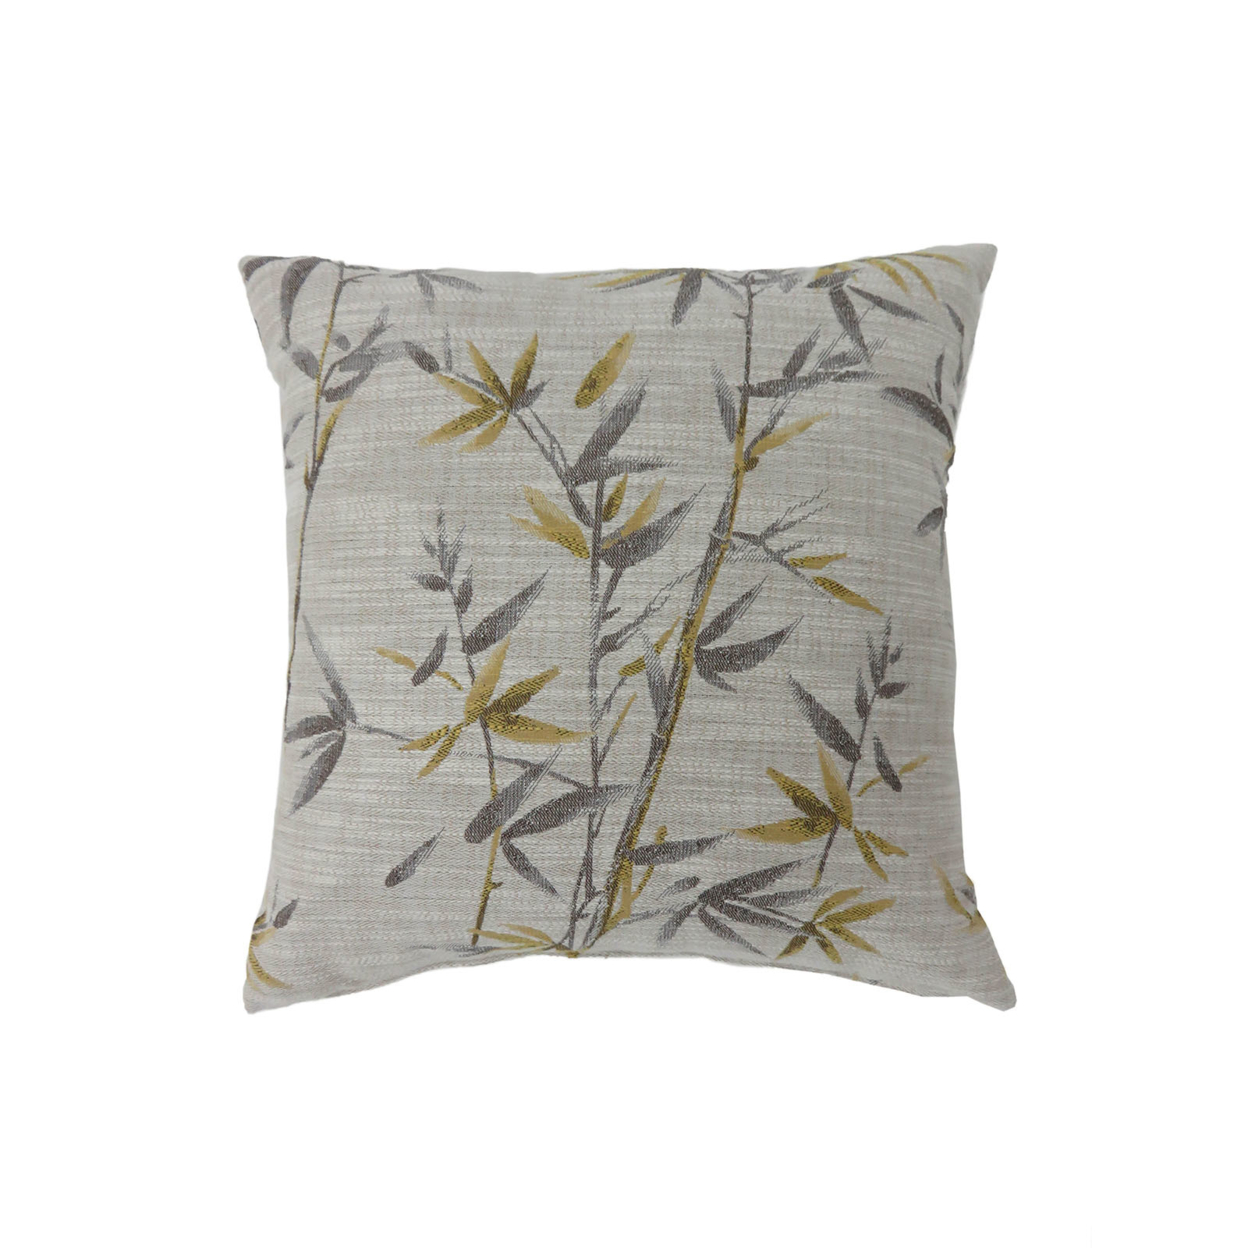 22 Inch Throw Pillow, Set Of 2, Bamboo Art Design Print, Gray, Yellow